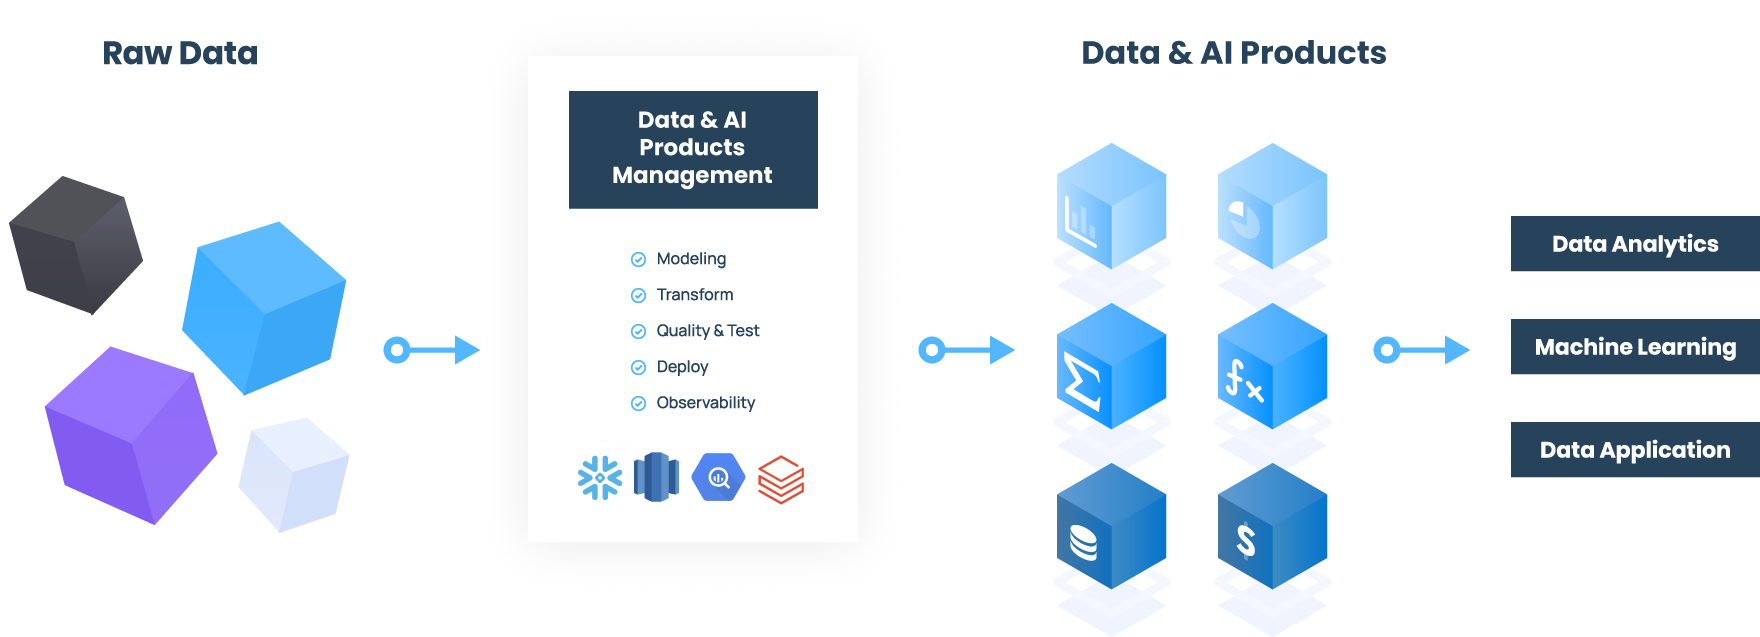 triggo.ai | Data Driven, DataOps, Data Products, Advanced Analytics, Data Application, Artificial Intelligence, Machine Learning